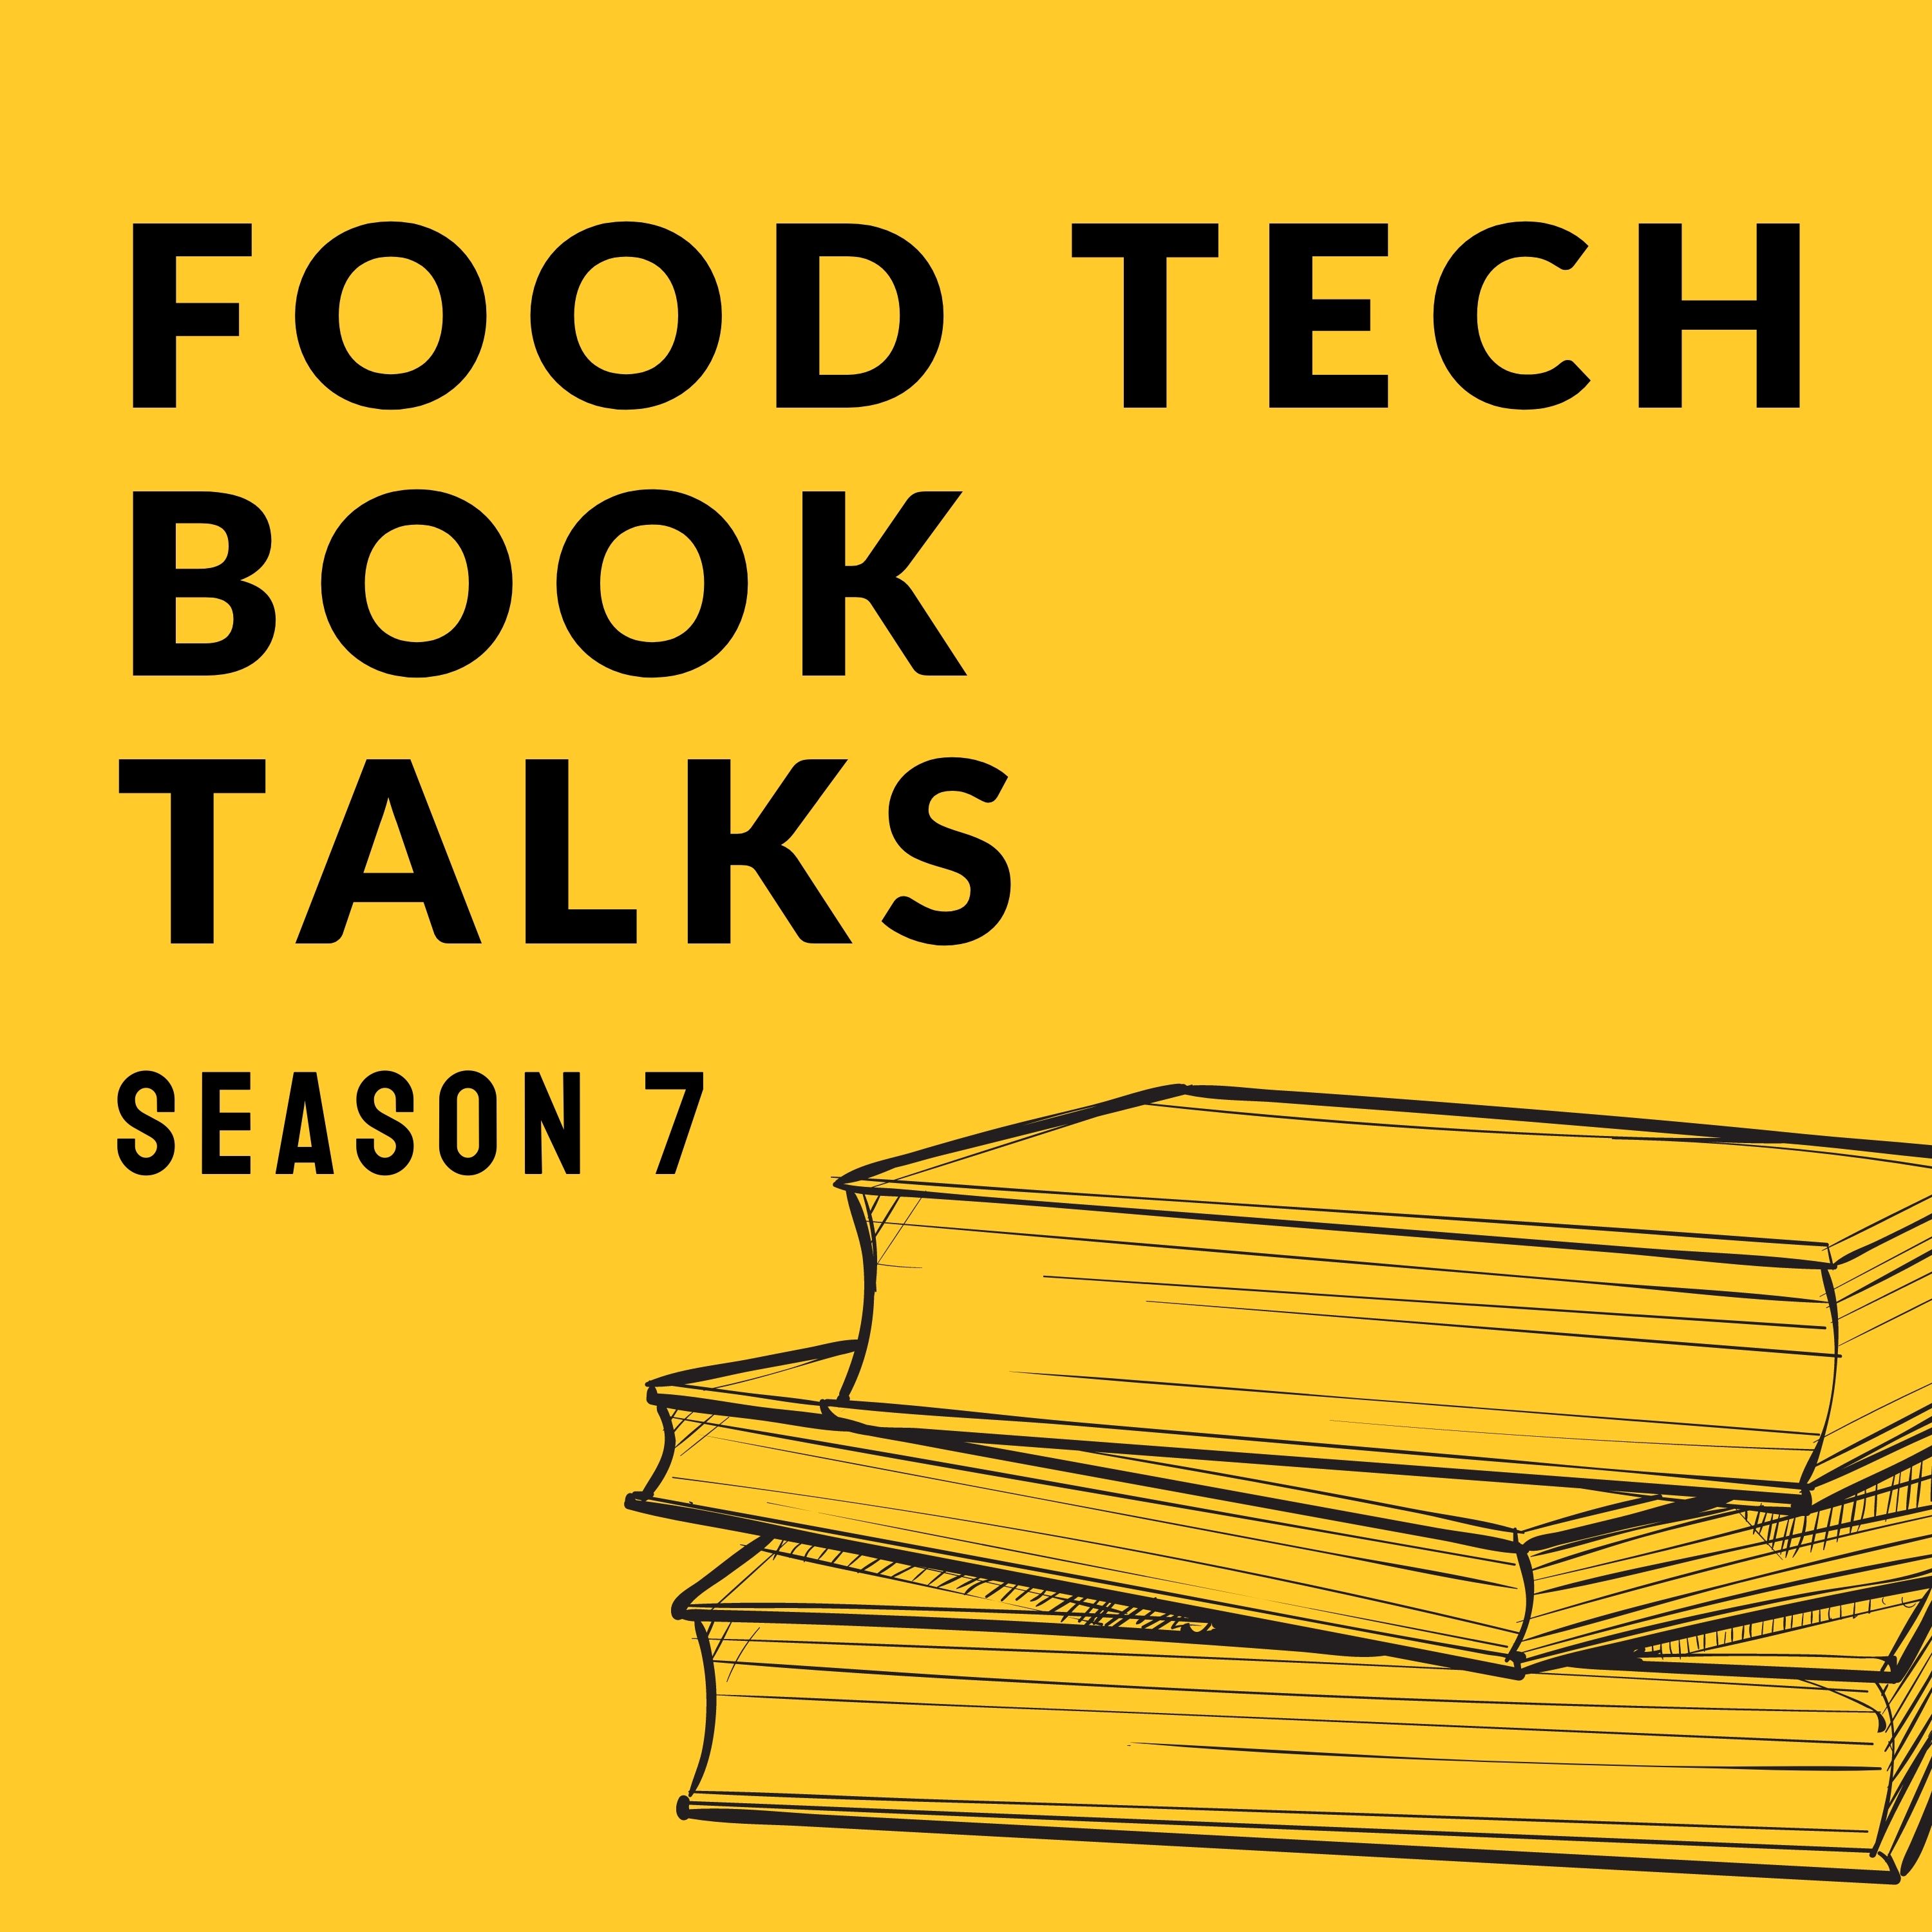 Food tech book reviews, best food tech books, books on food tech, food technology books, books on our food system